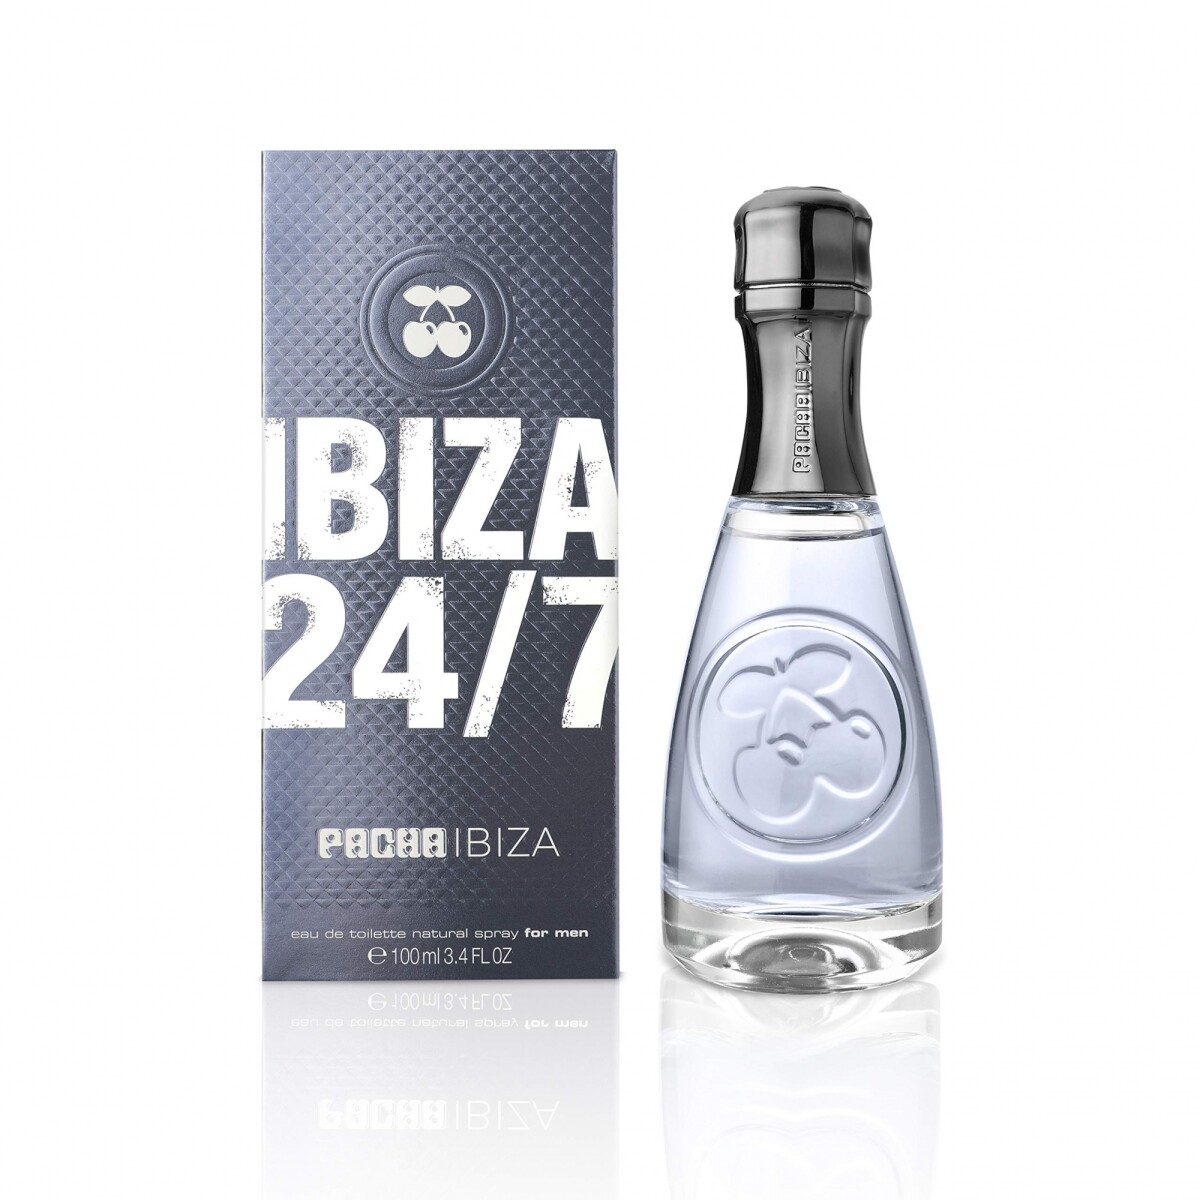 Perfume Pacha Ibiza 24/7 Him Edt 100ML - 001 